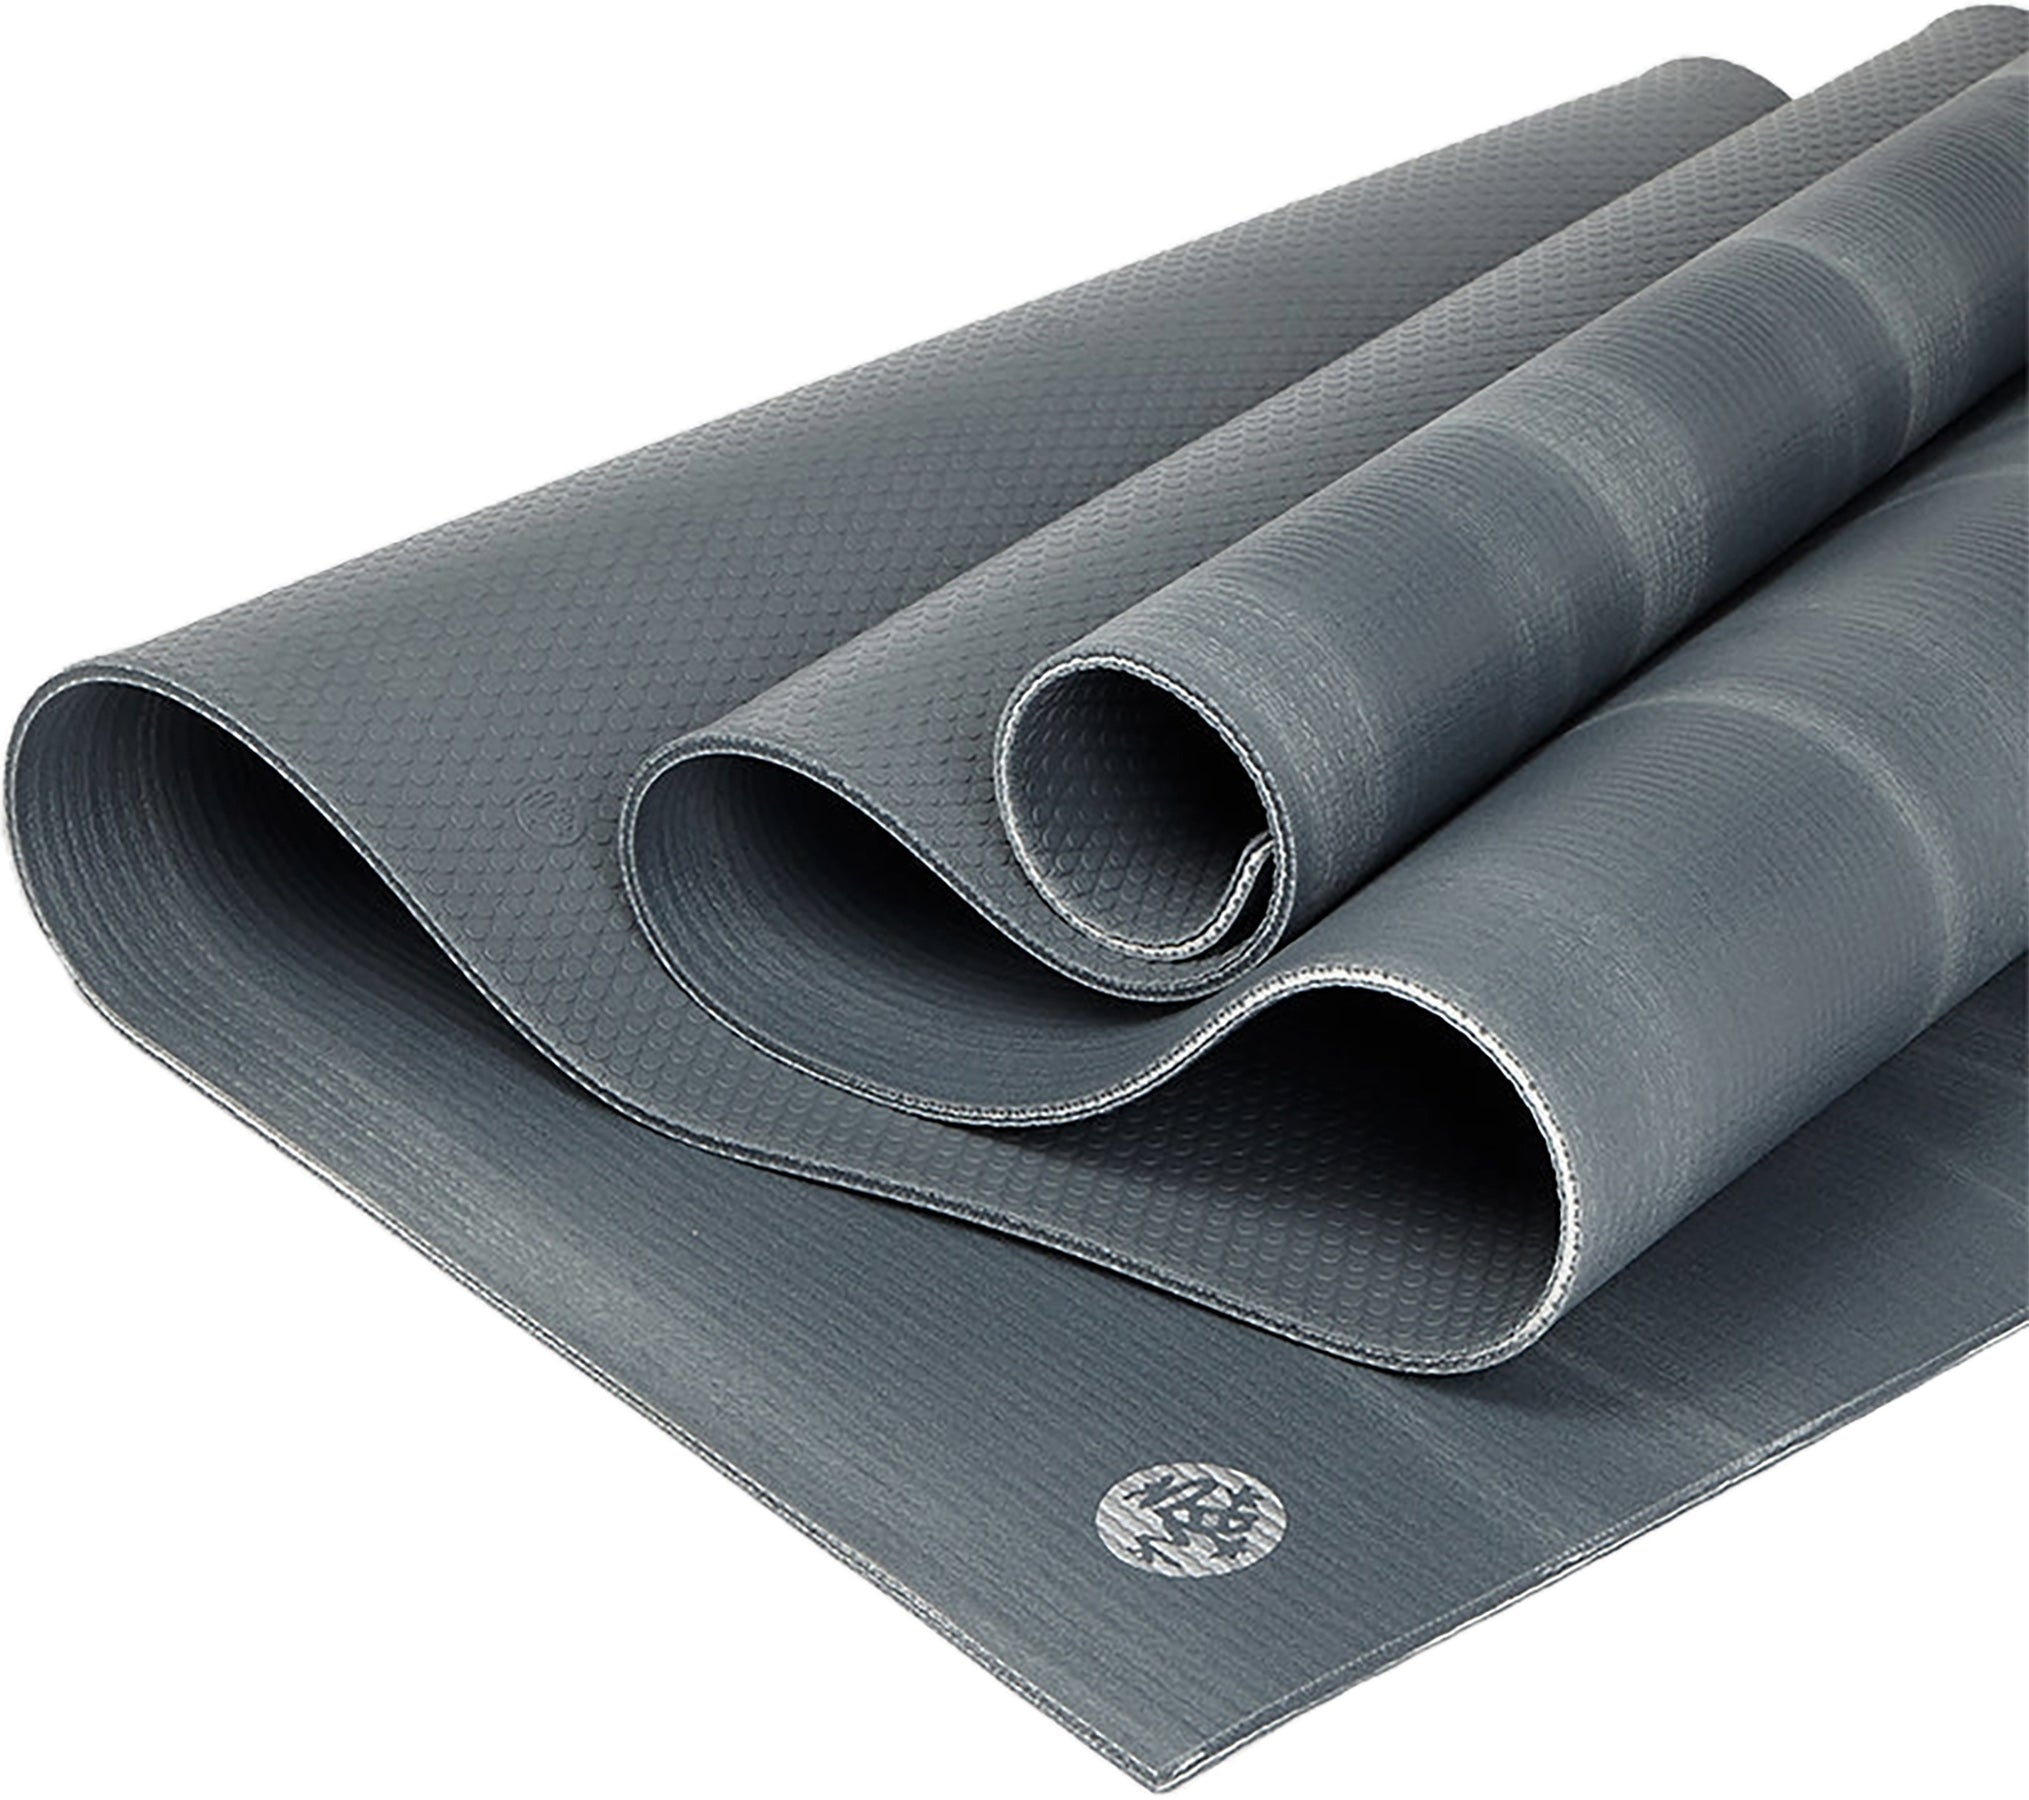 Manduka PRO yoga mat   everything for yoga practice: yoga  clothes, yoga mats, yoga towels, yoga props, sport bras, leggings